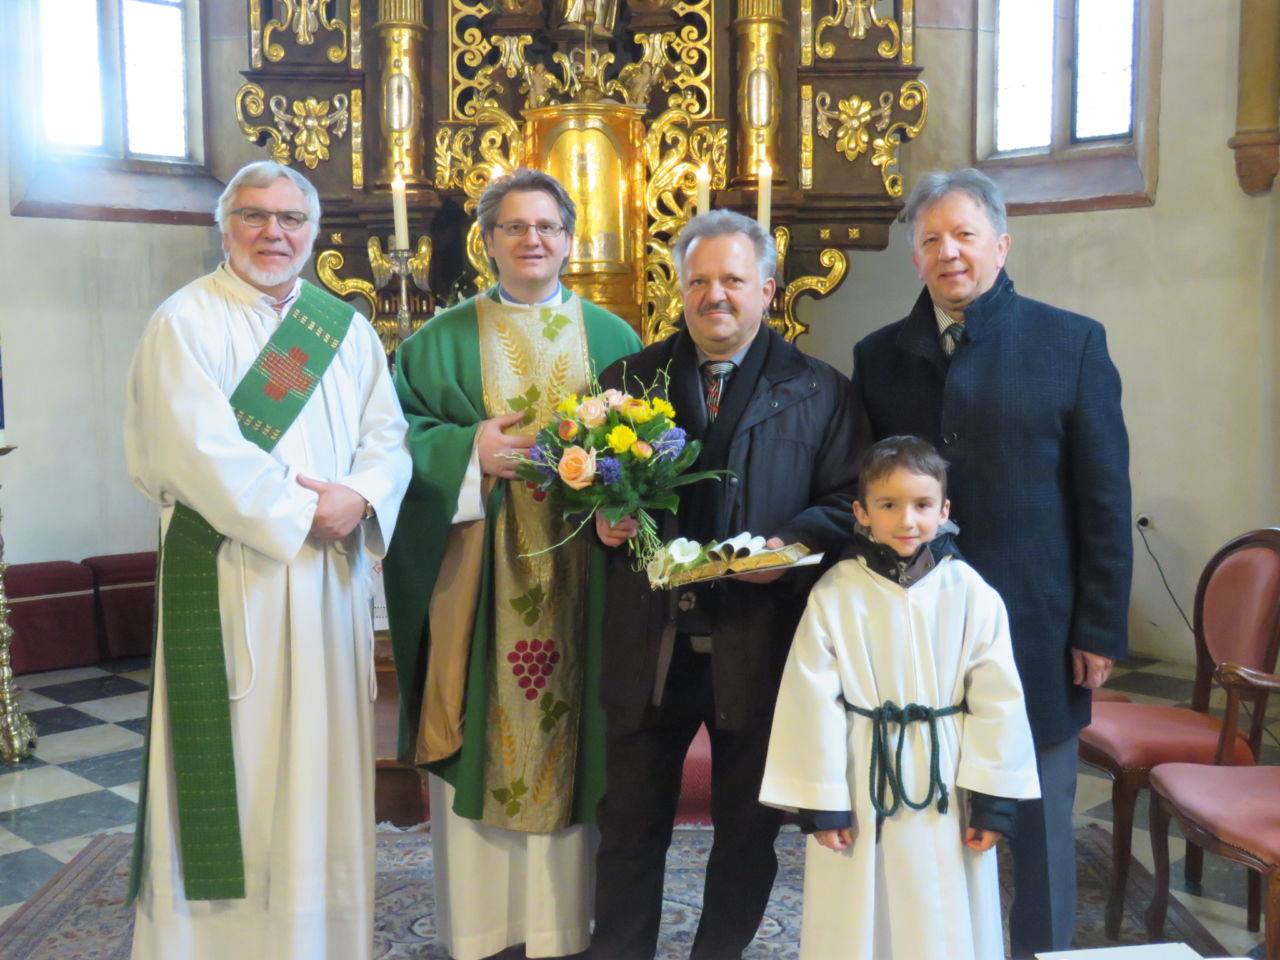 v.l.n.r. Diakon O. Pöcher, Pfarrer Dr. J. Sedlmaier, Gerald Rabitsch, Bgm. E. Kessler mit einem fleißigen Ministranten